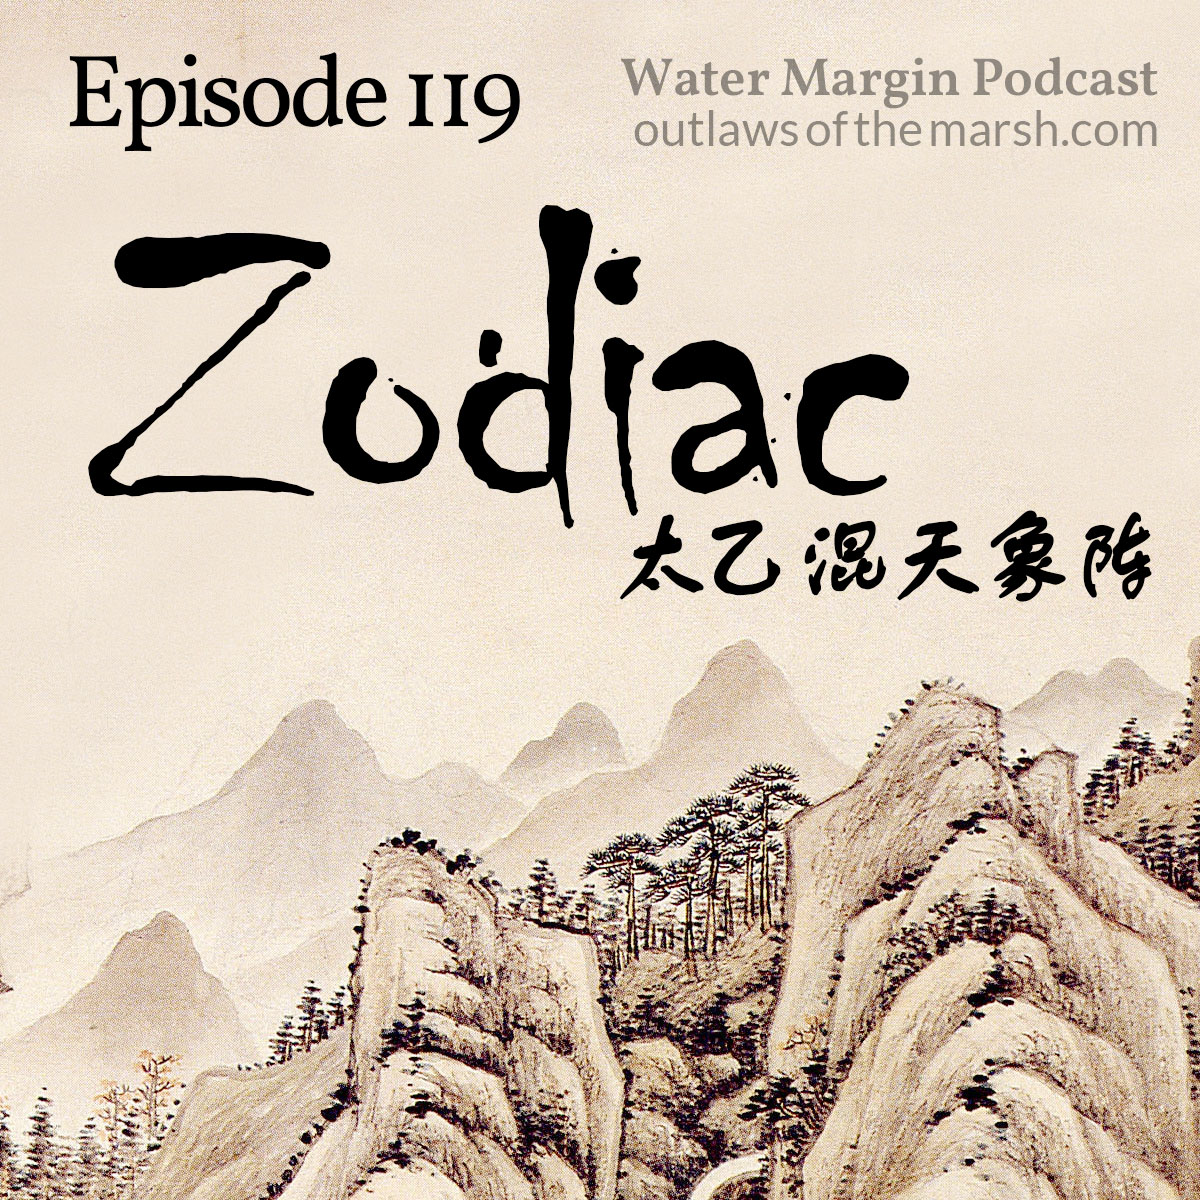 Water Margin Podcast: Episode 119